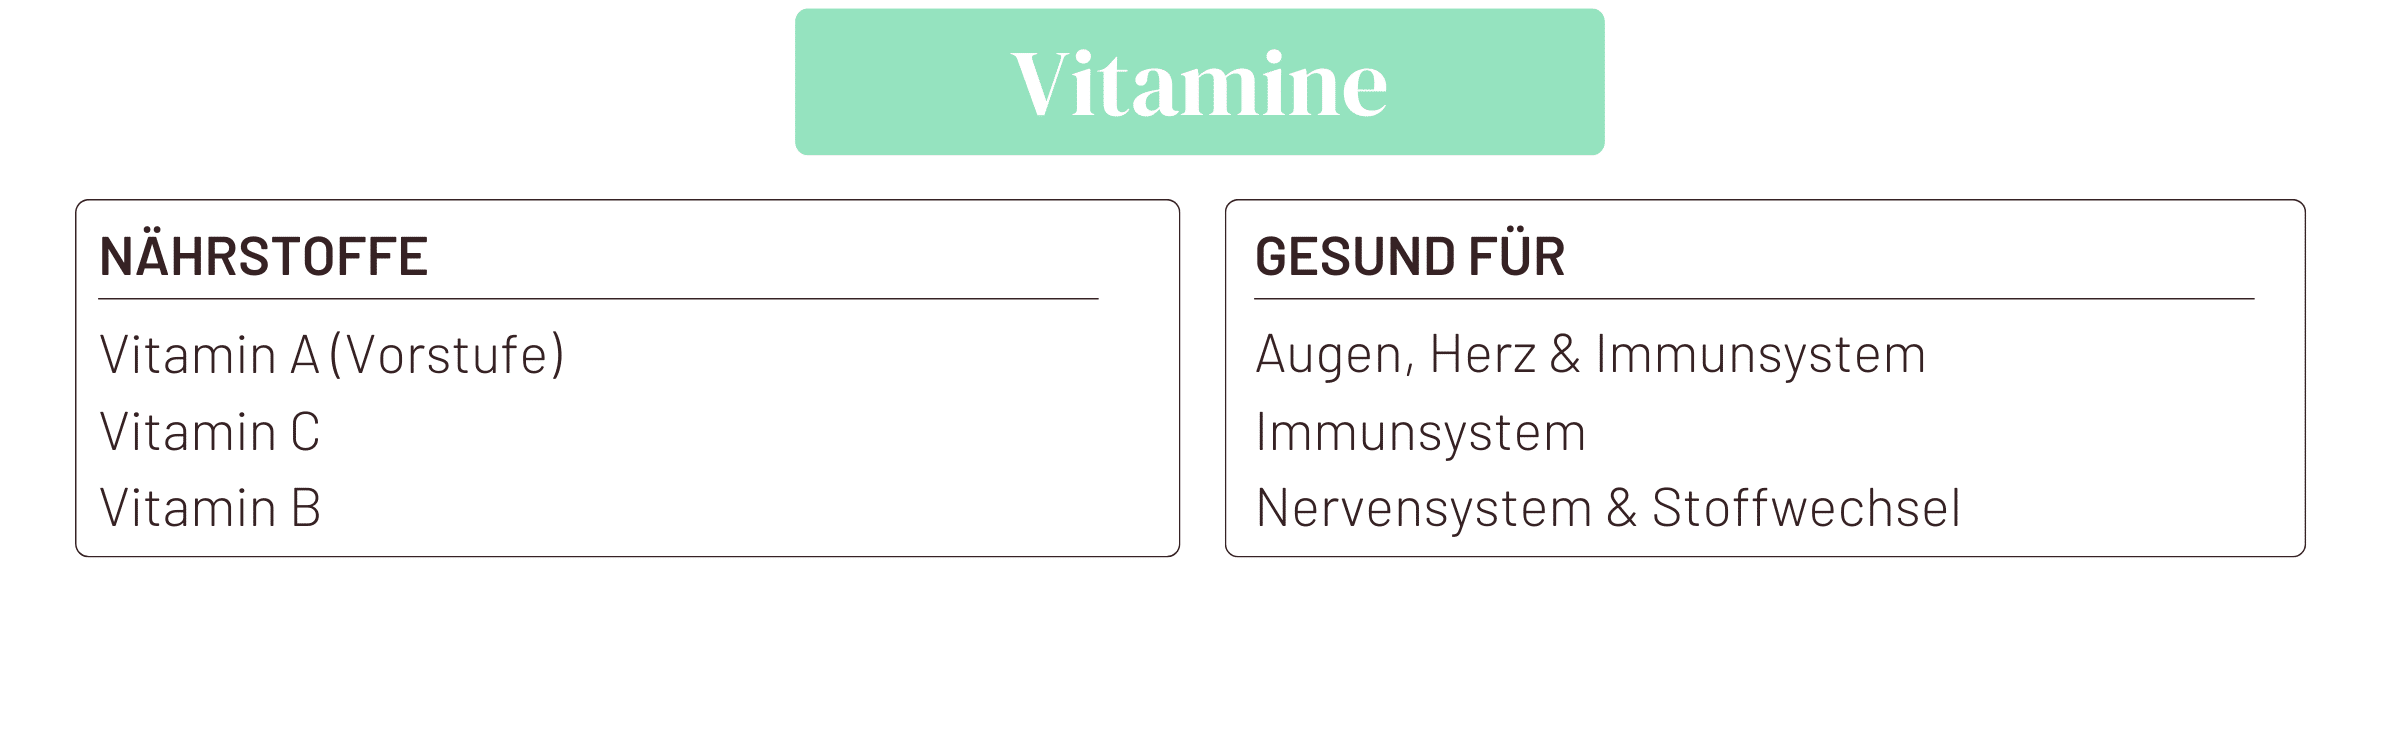 Naehrstoffe Kürbis - hier Vitamine